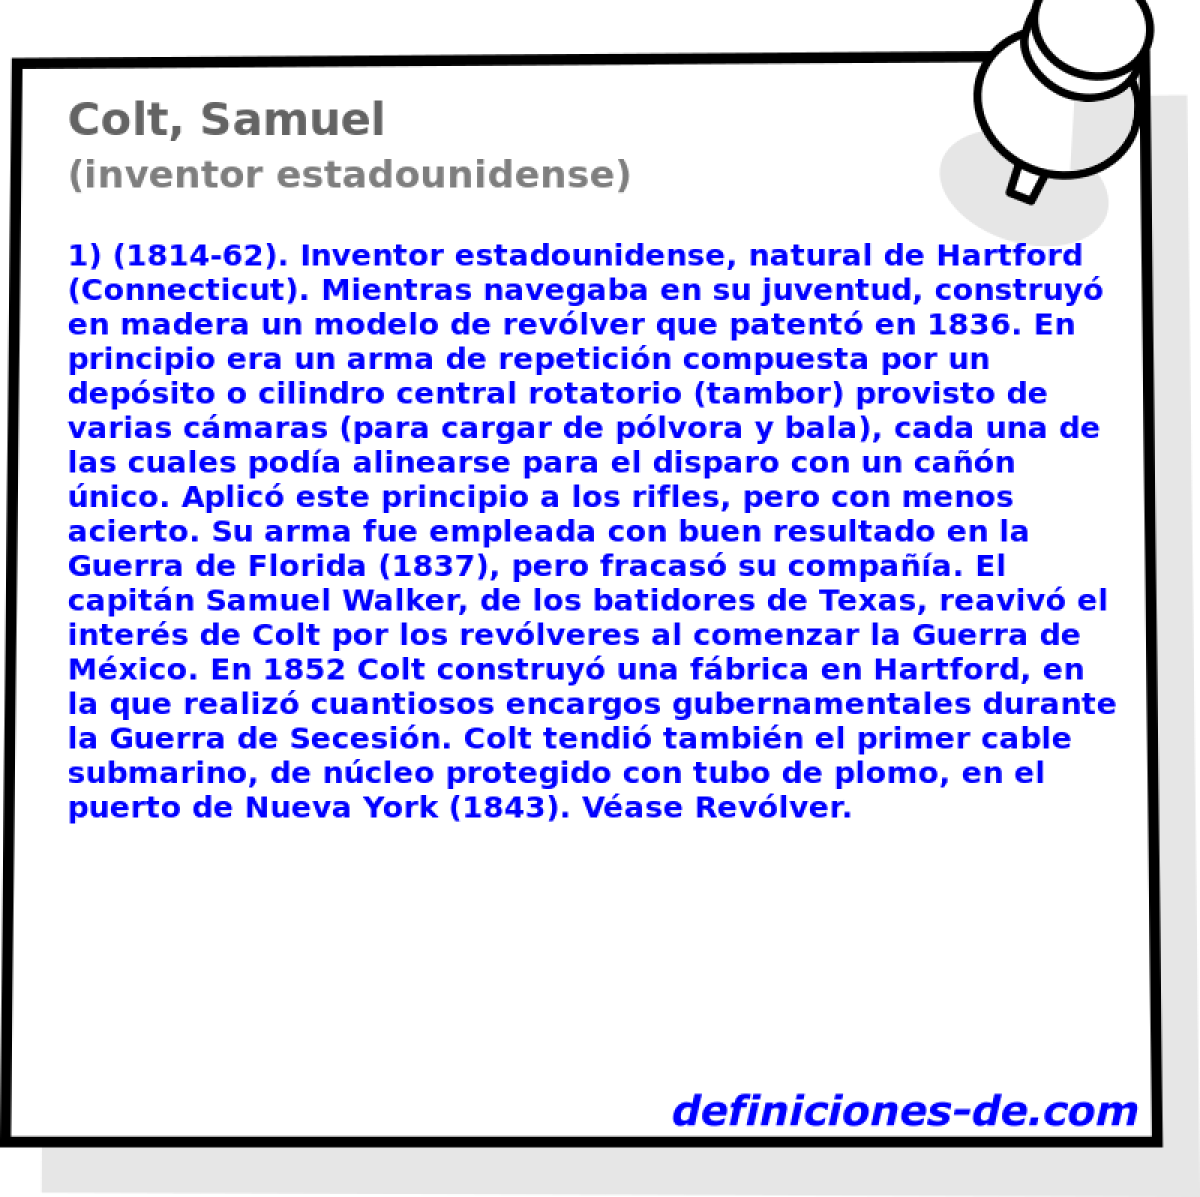 Colt, Samuel (inventor estadounidense)